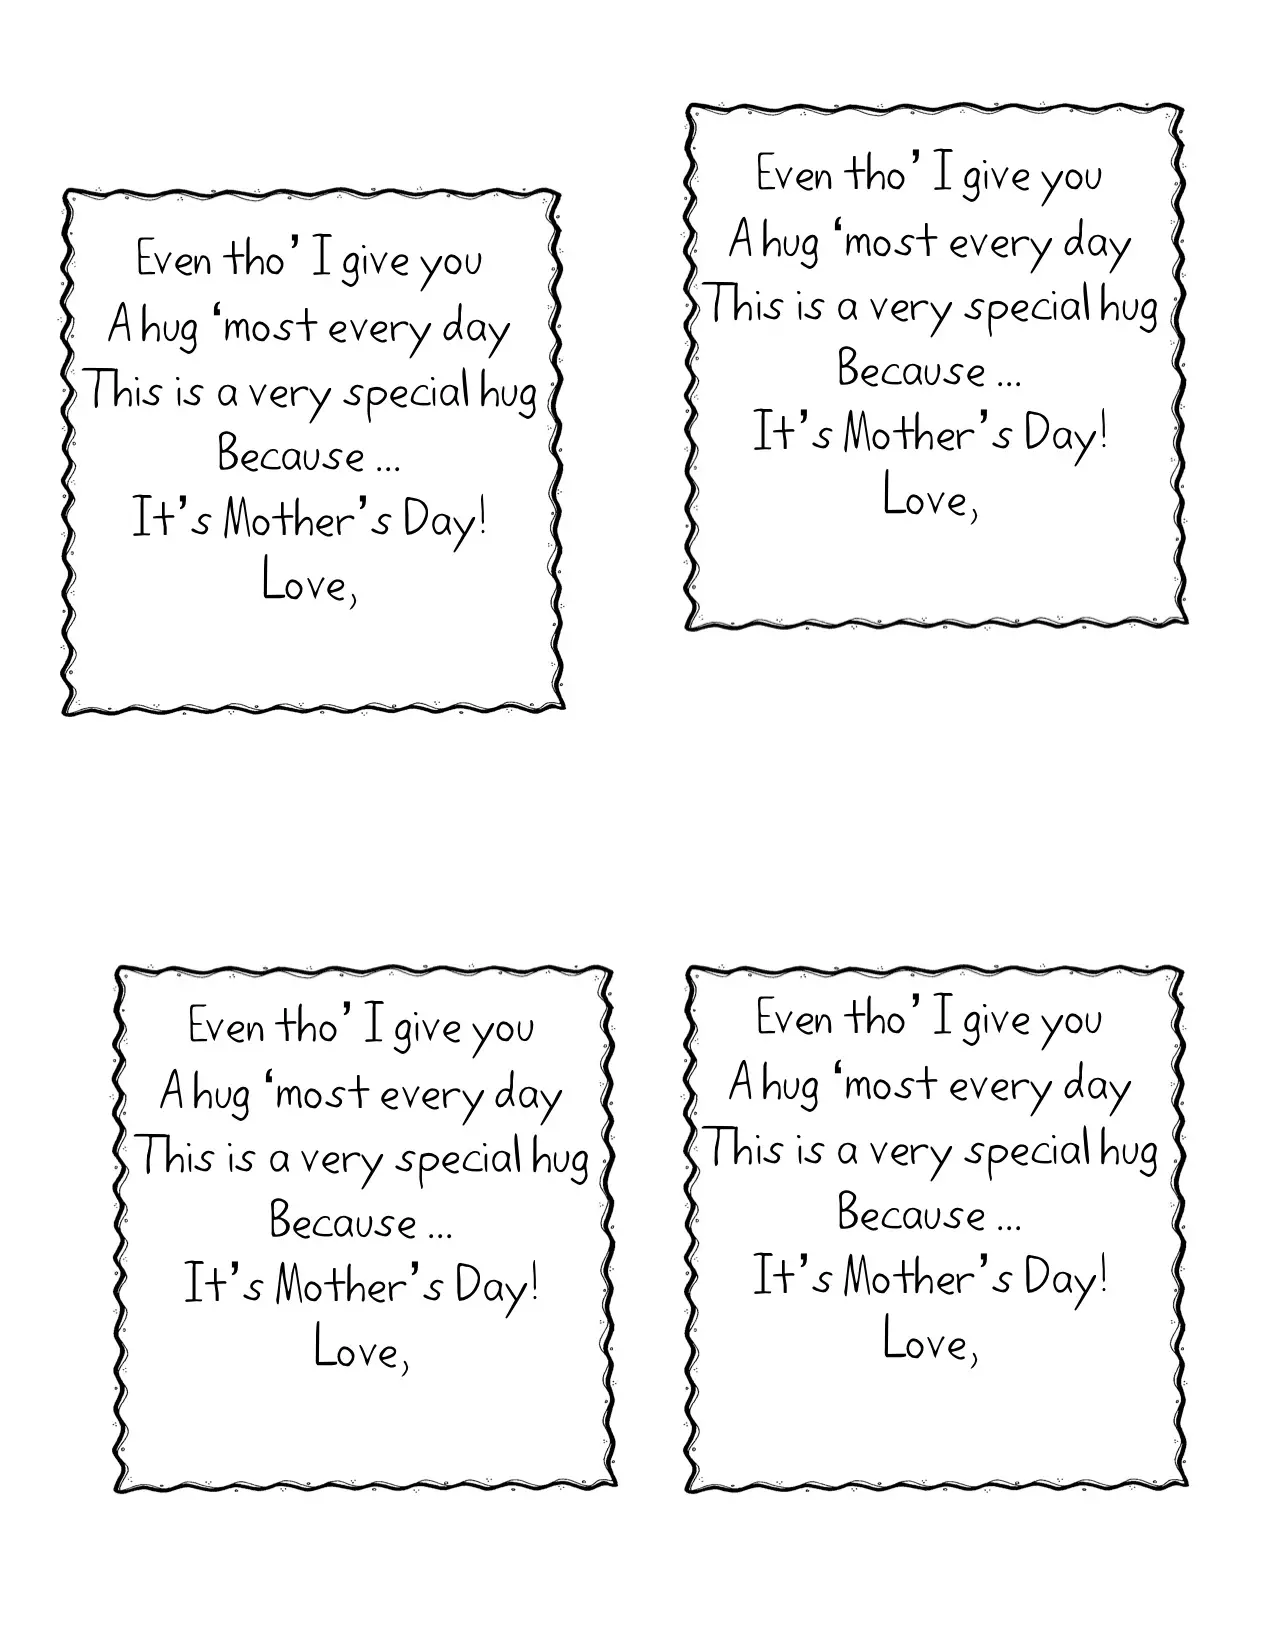 Preschool mothers day Poems